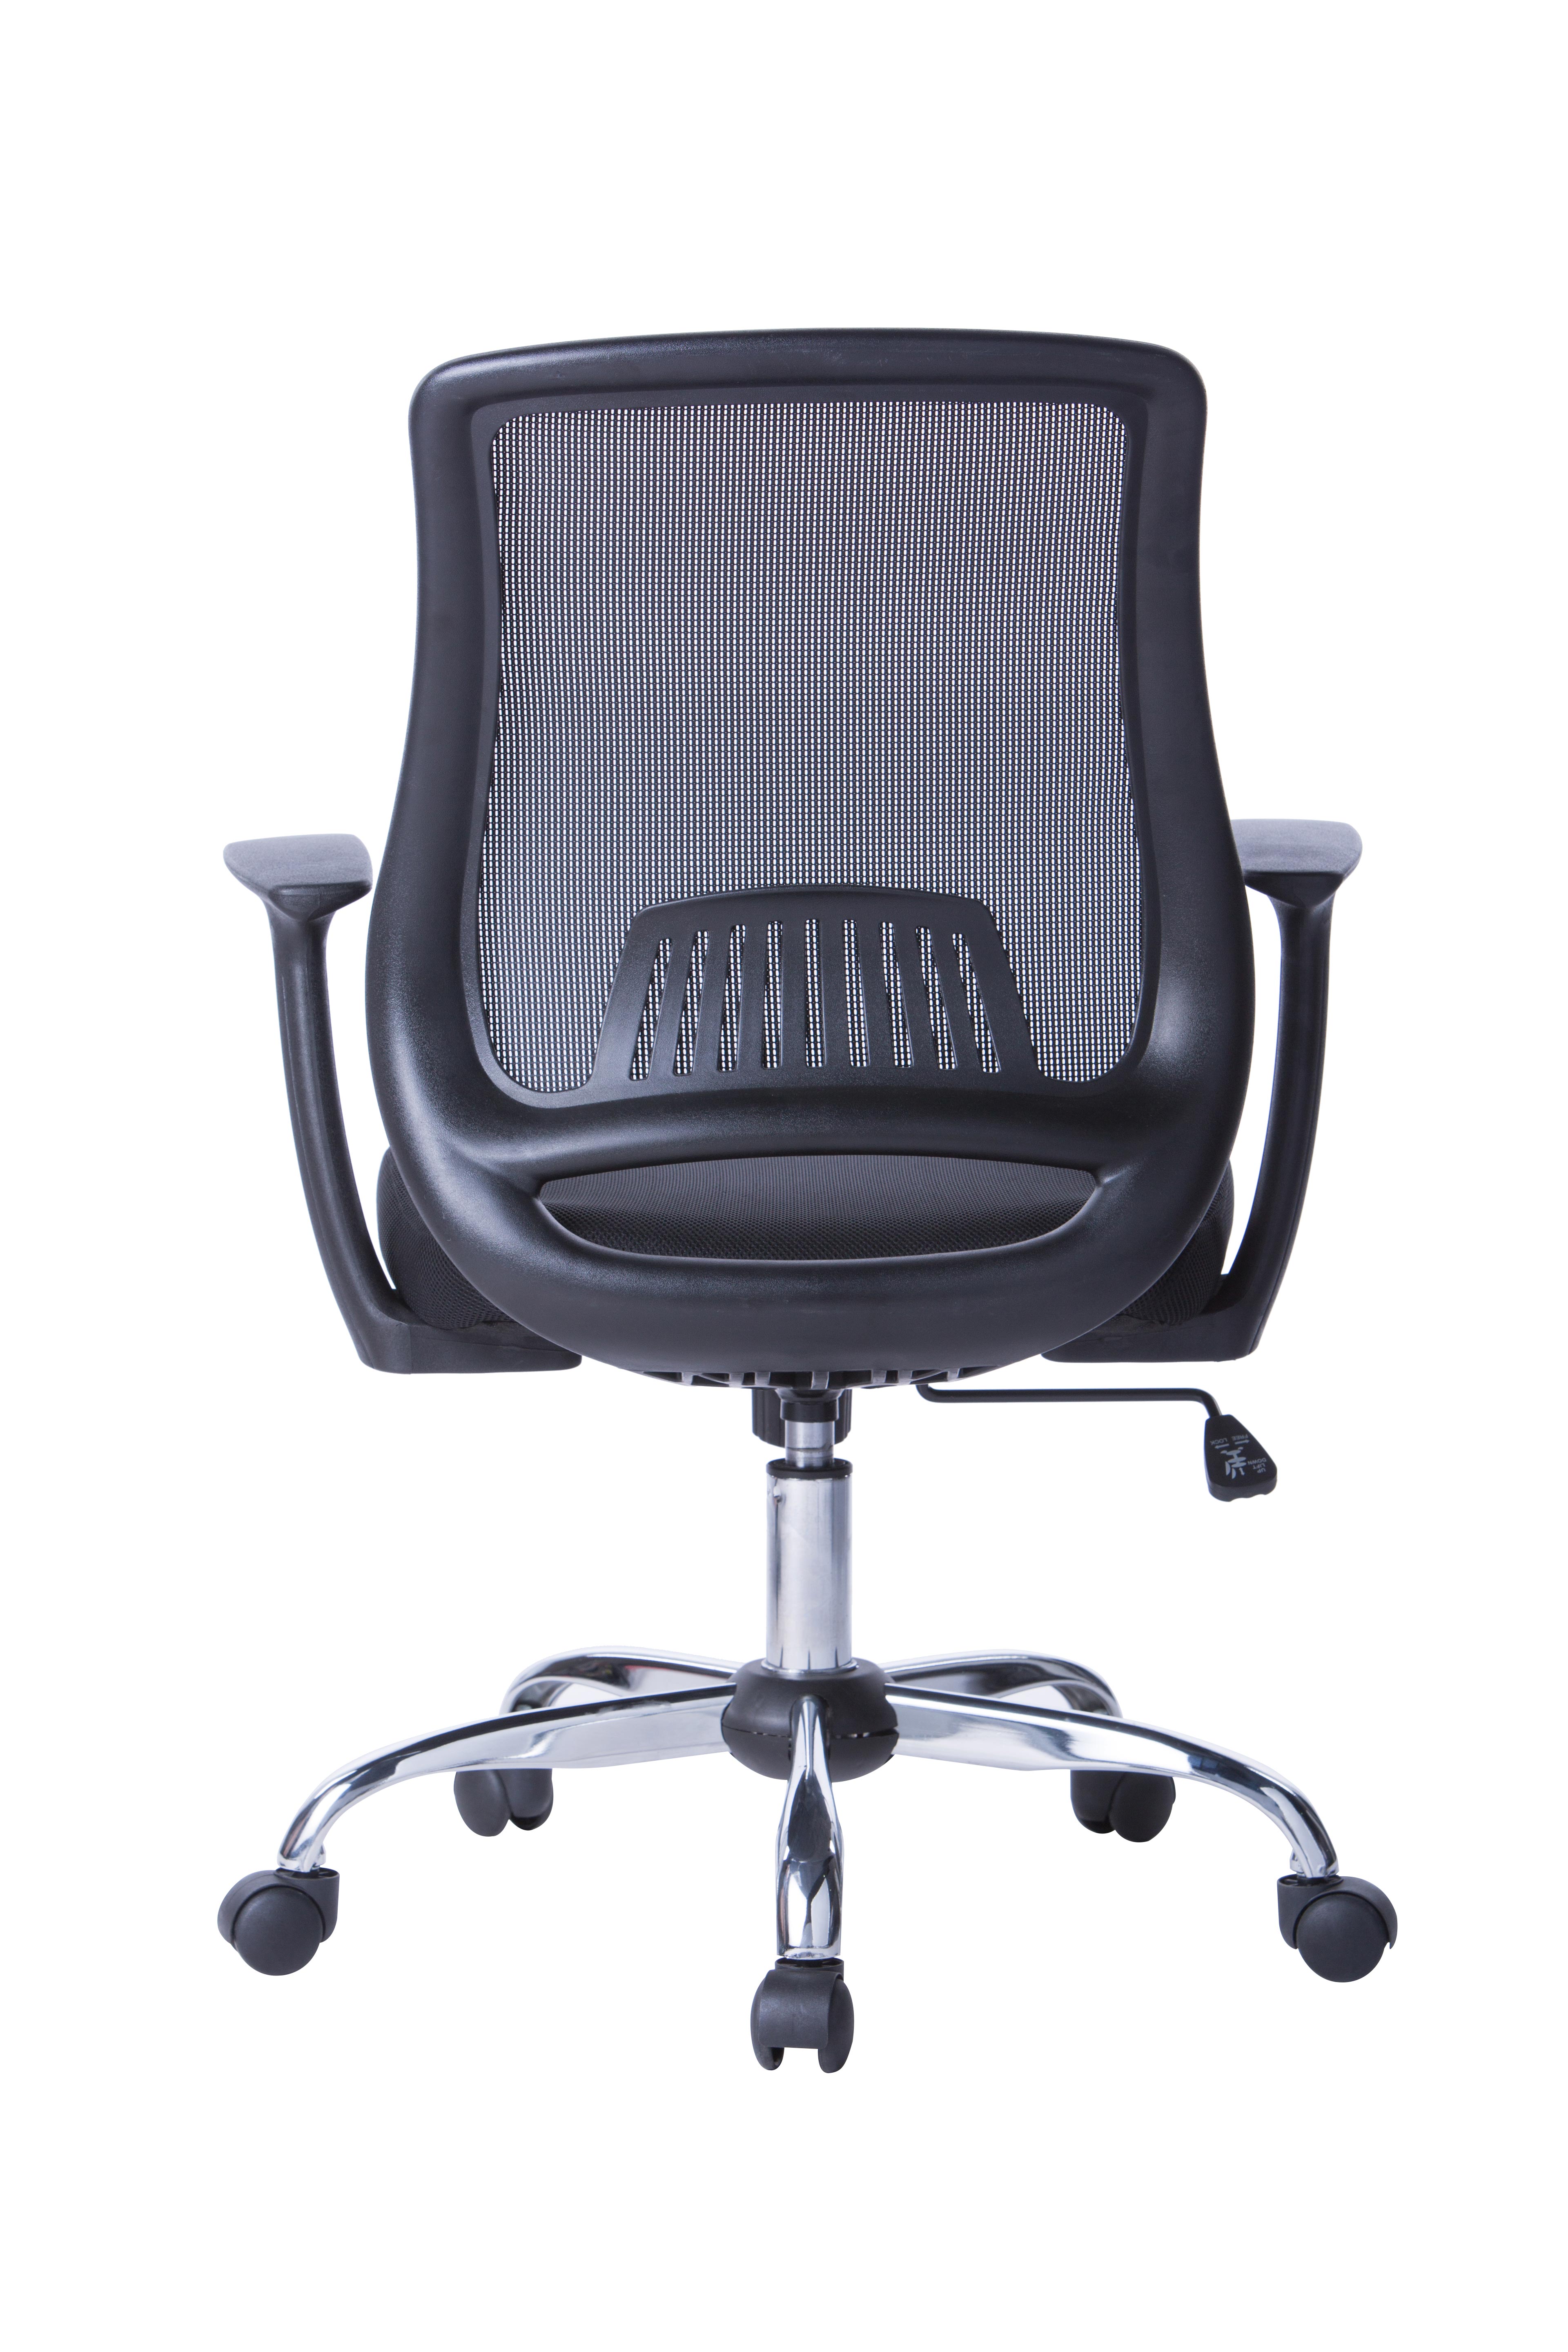 W-125 Modern Office Rotating Chair